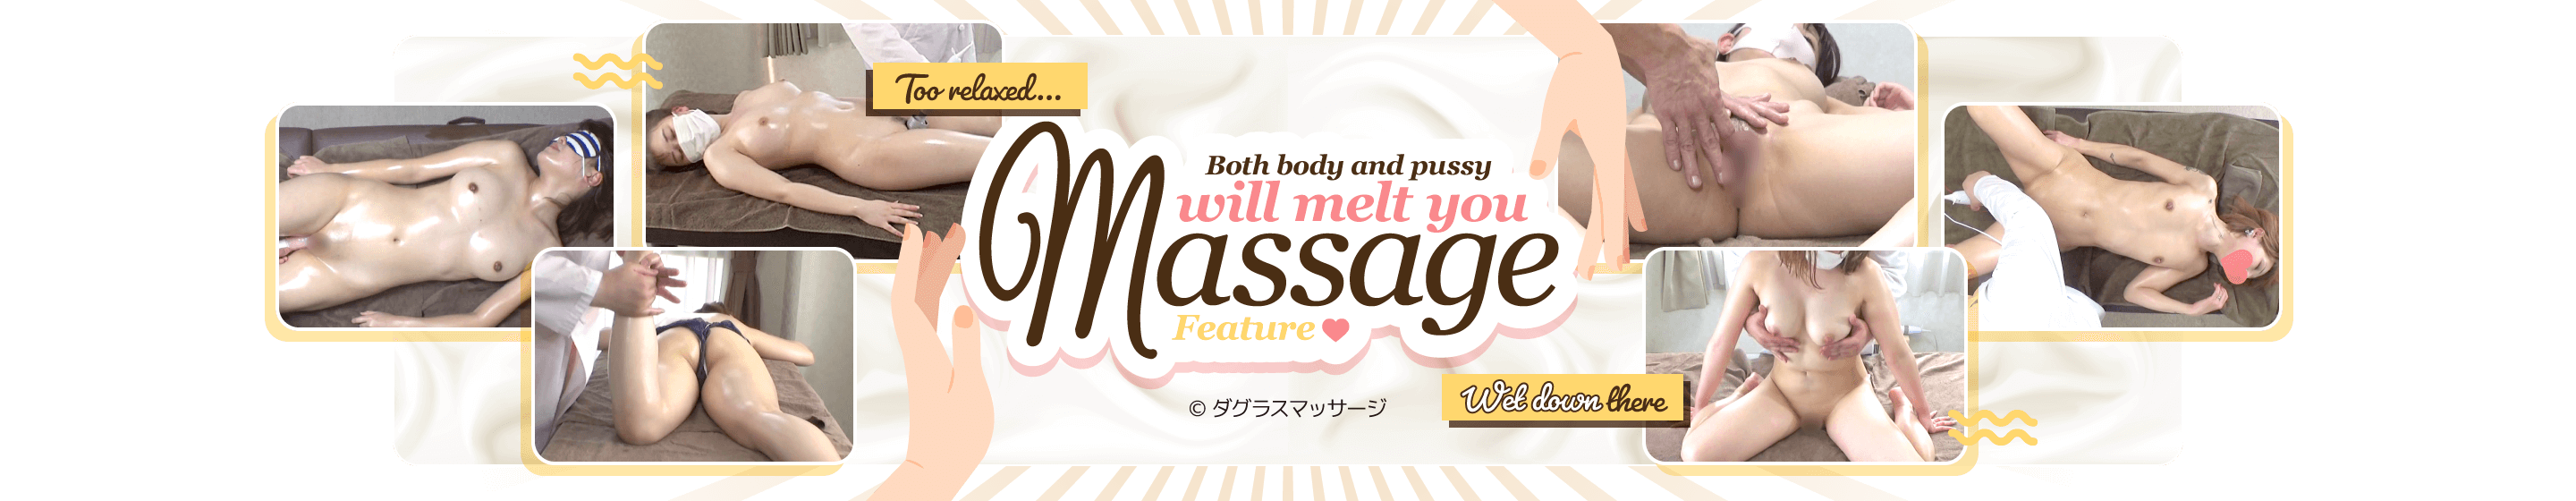 Massage Feature